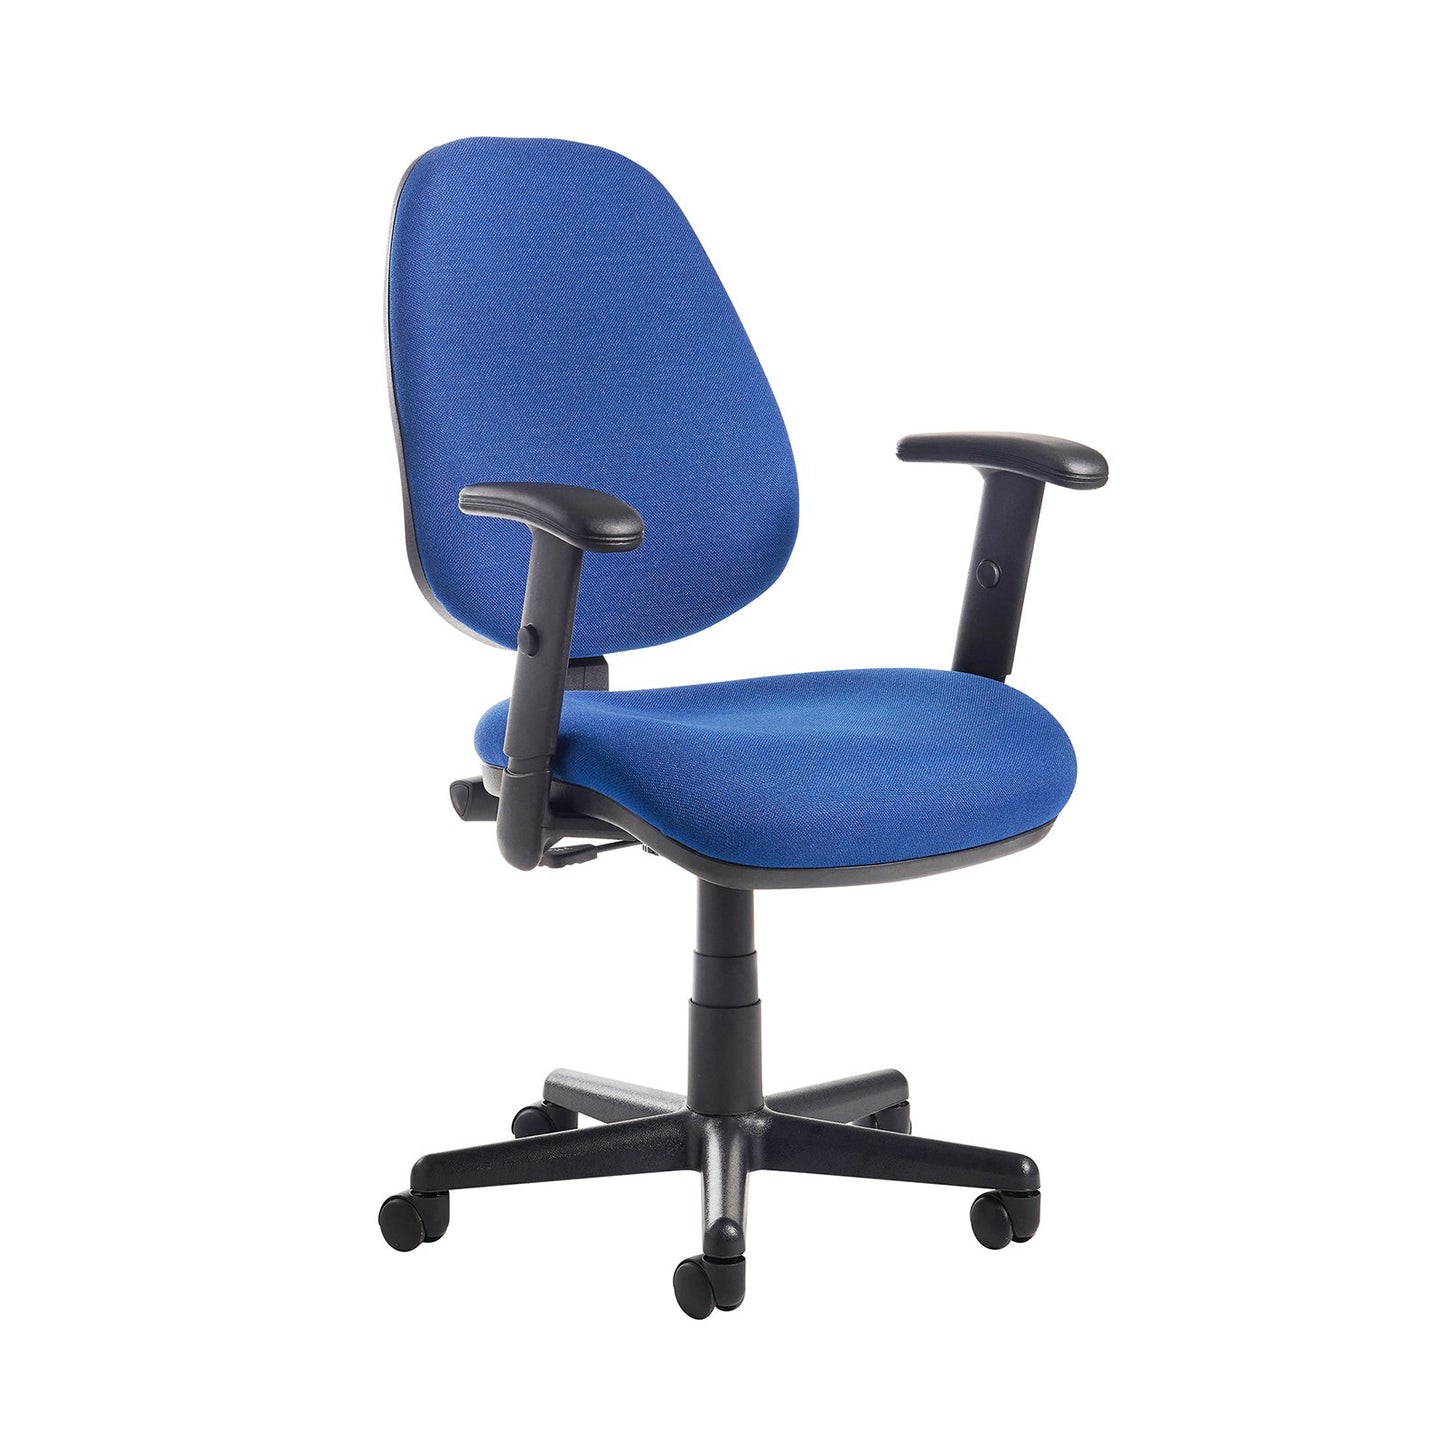 Bilbao fabric operators chair